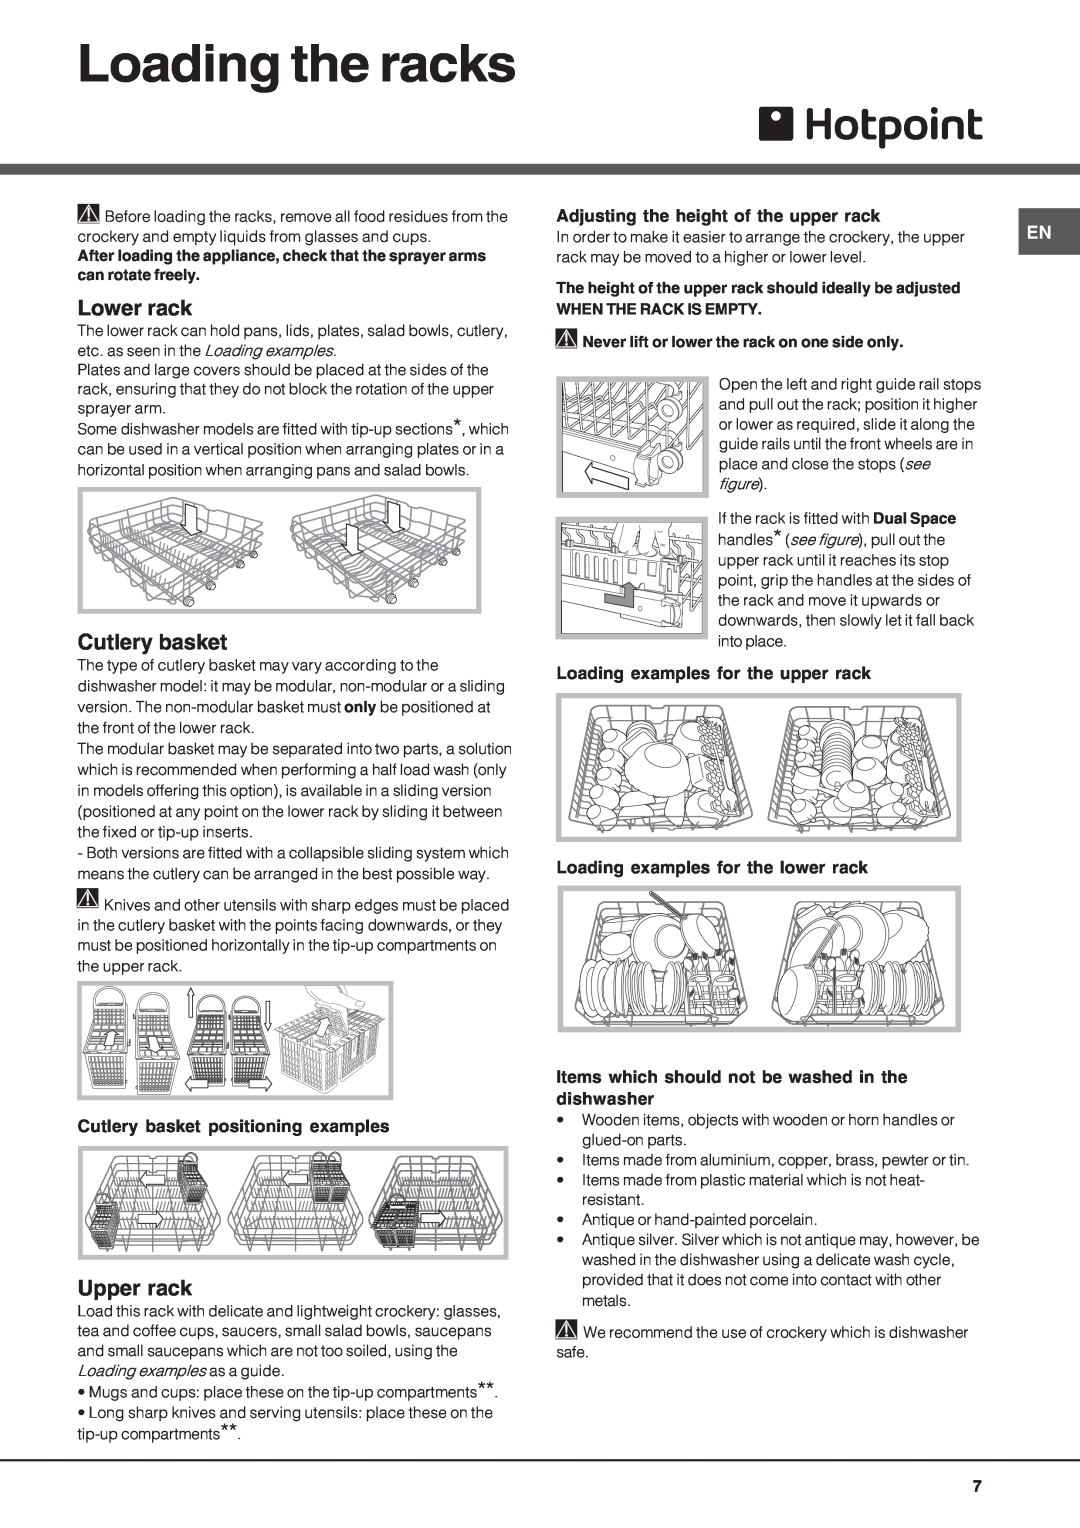 Hotpoint LFT04 manual Loading the racks, Lower rack, Cutlery basket, Upper rack 